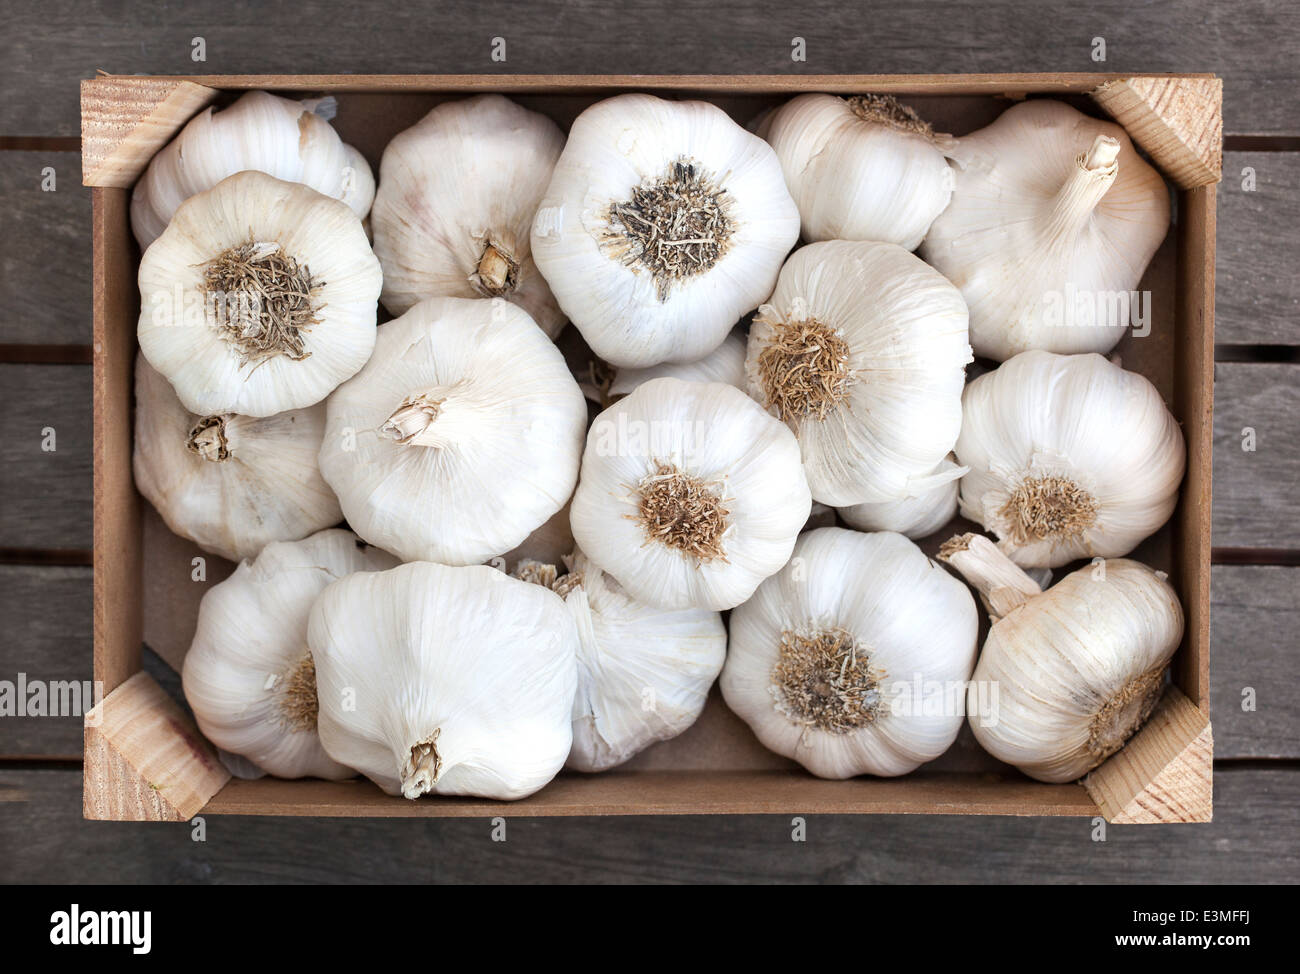 Wooden box of fresh garlic Stock Photo